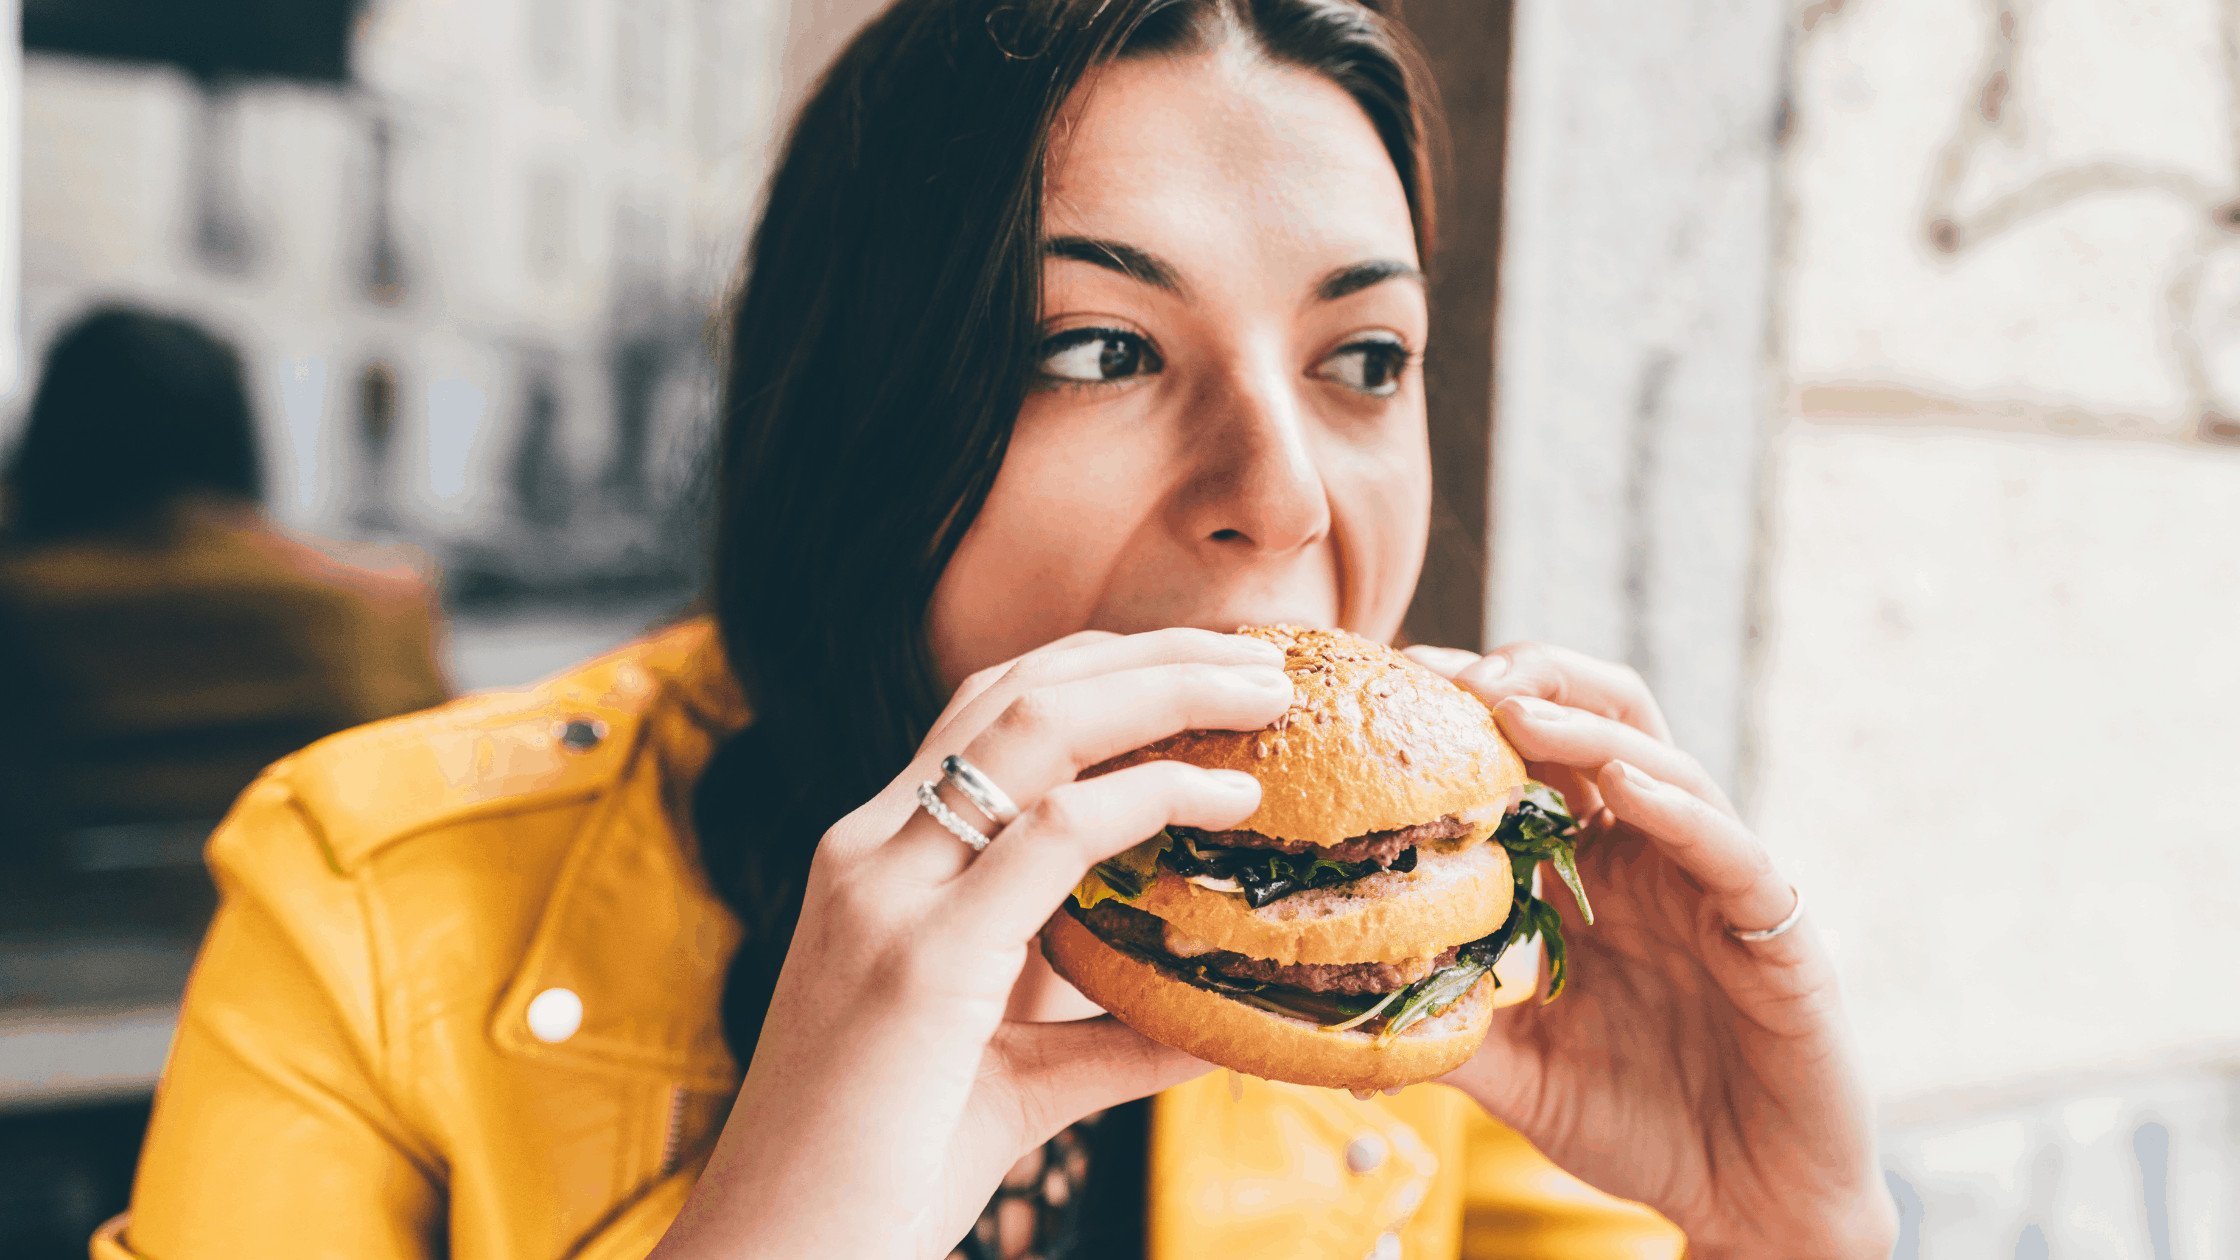 11person eating hamburger and phthalate exposure